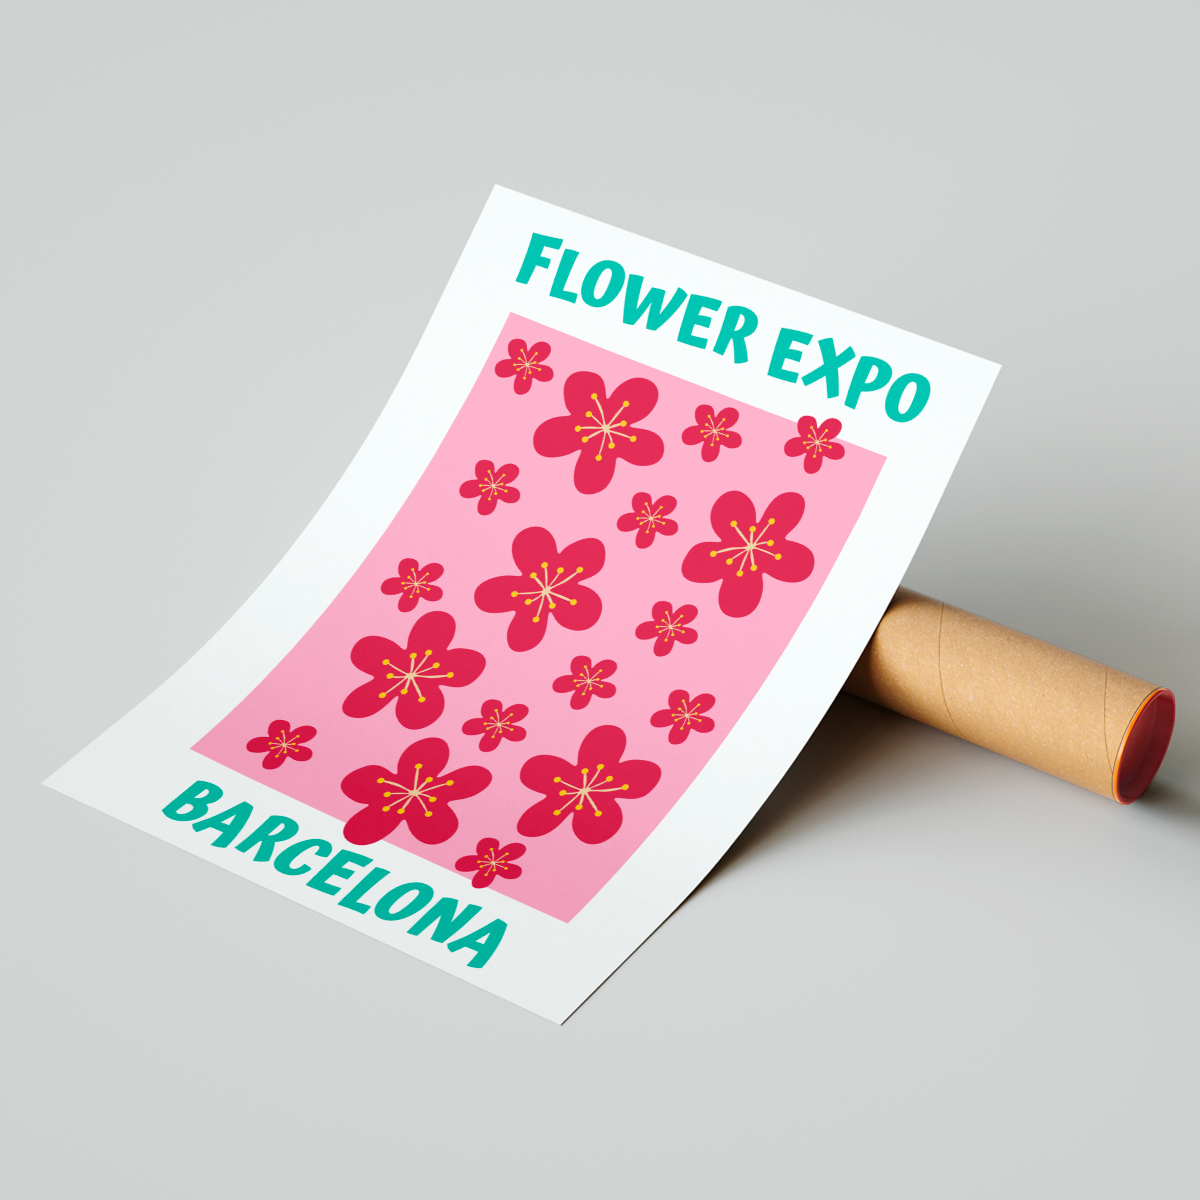 Affiche Flower Expo Barcelona